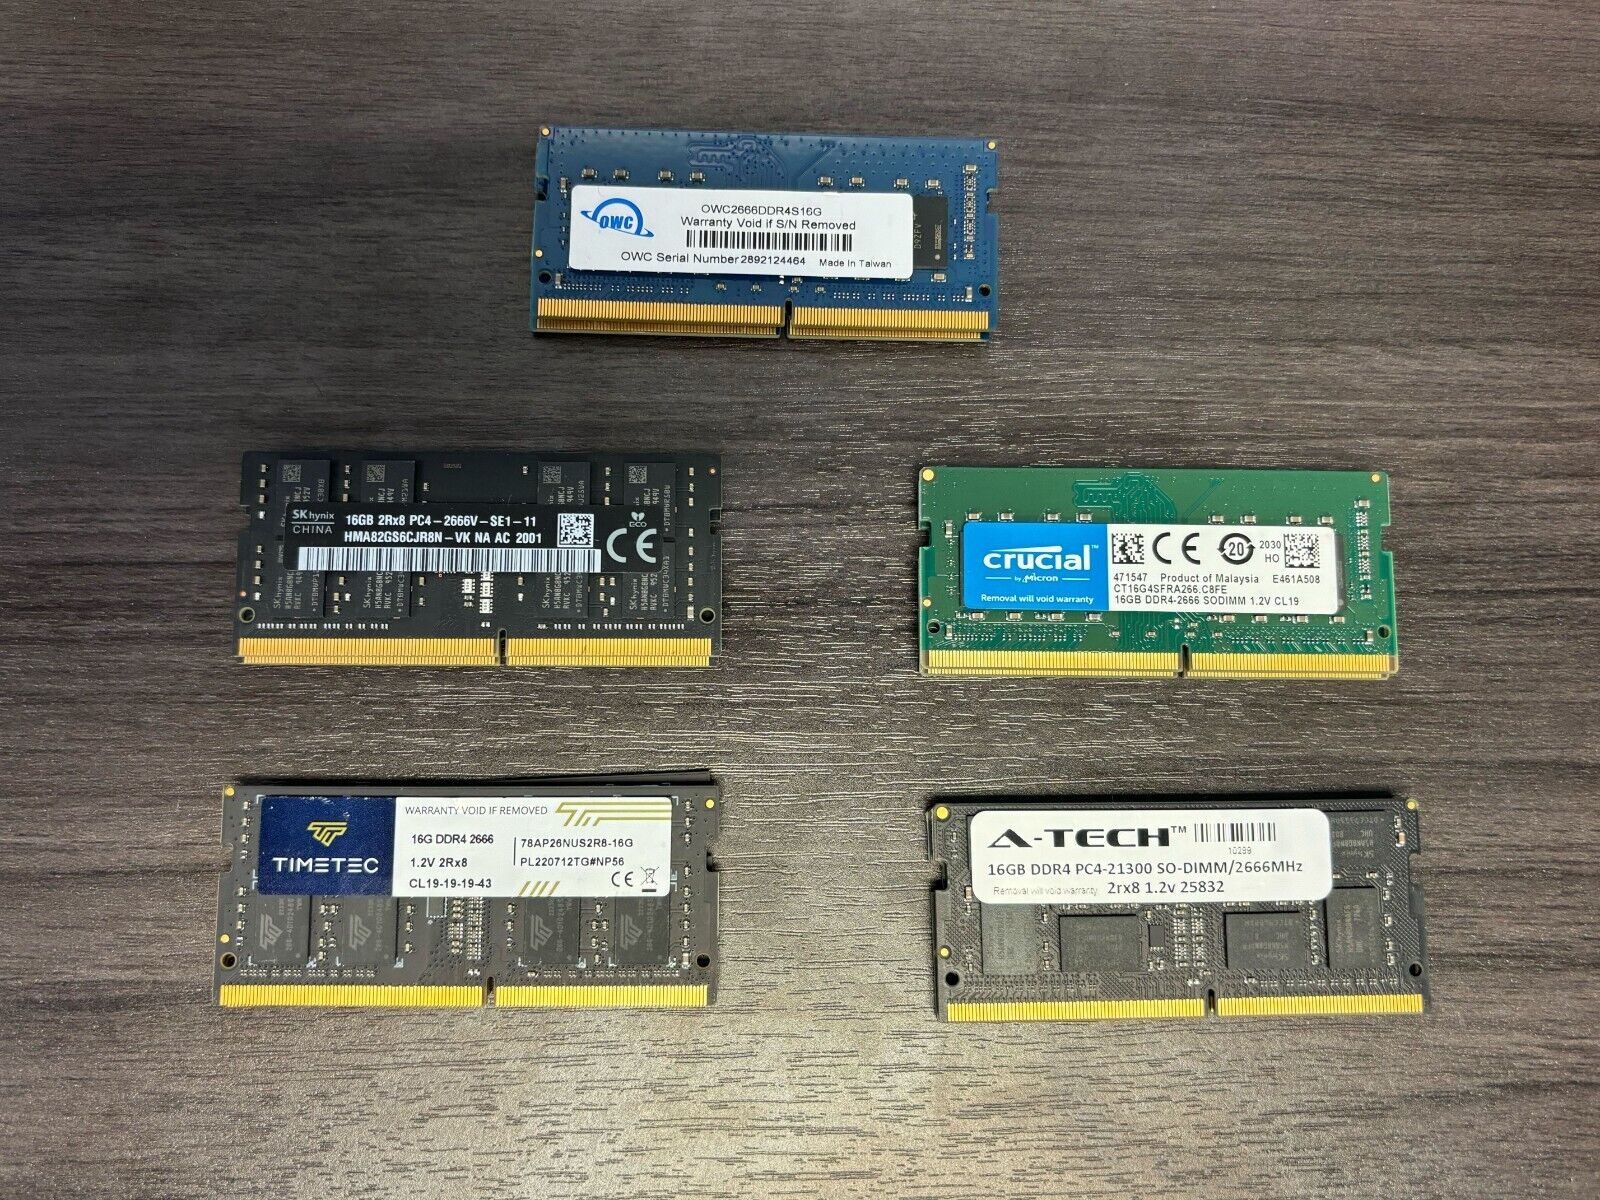 Lot of 2 16GB DDR4 2666 PC4-21300 SODIMM RAM Modules Mixed Brand